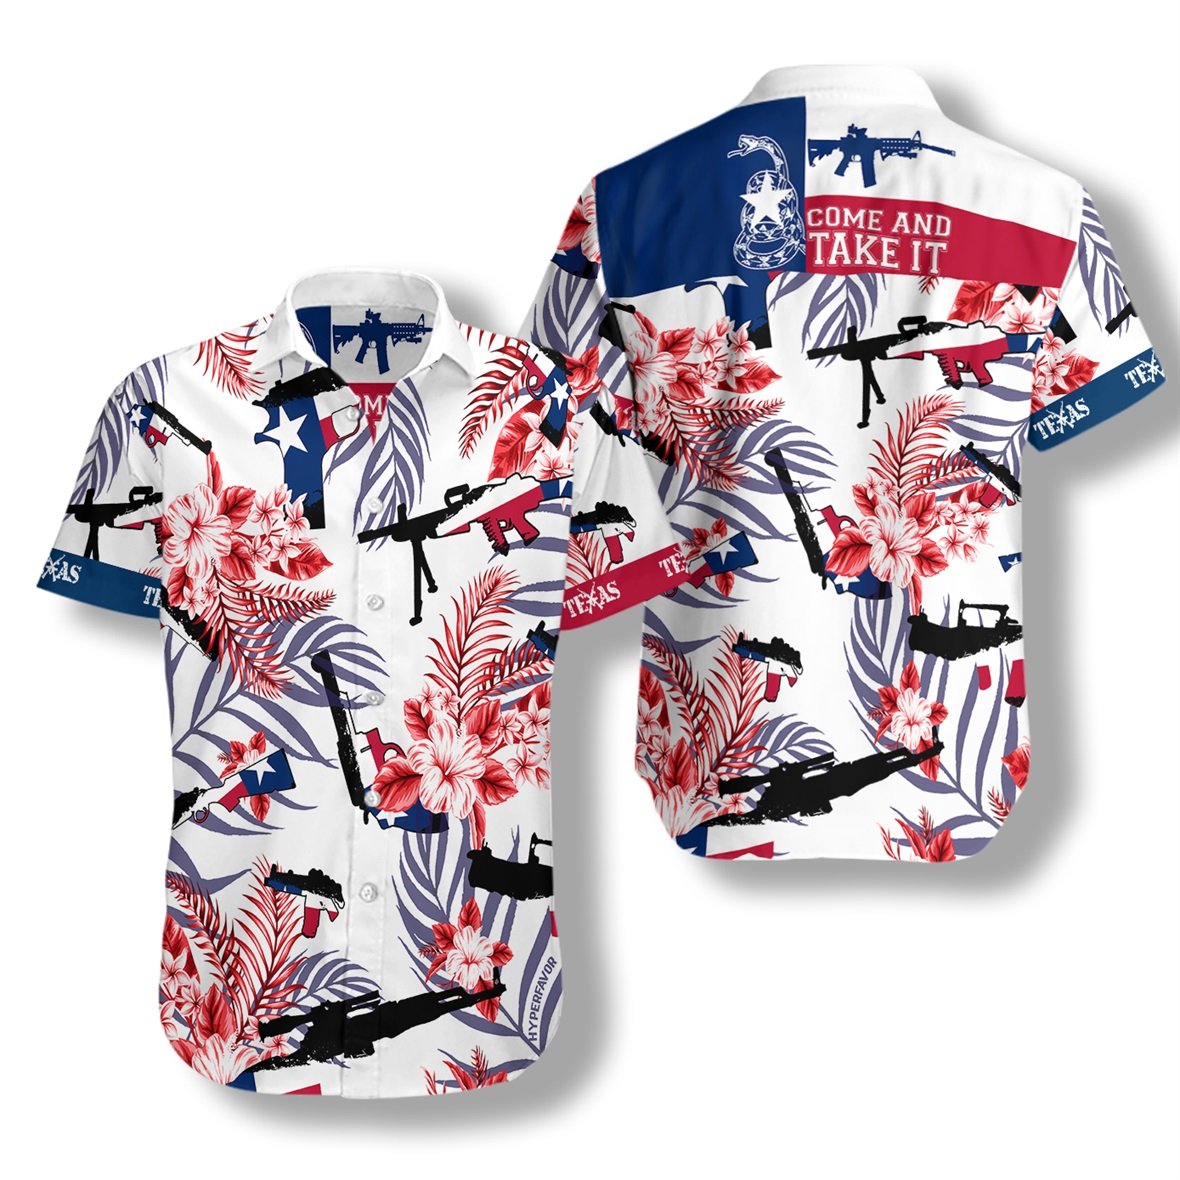 Come and take it Texas gun lover hawaiian shirt – Saleoff 120721